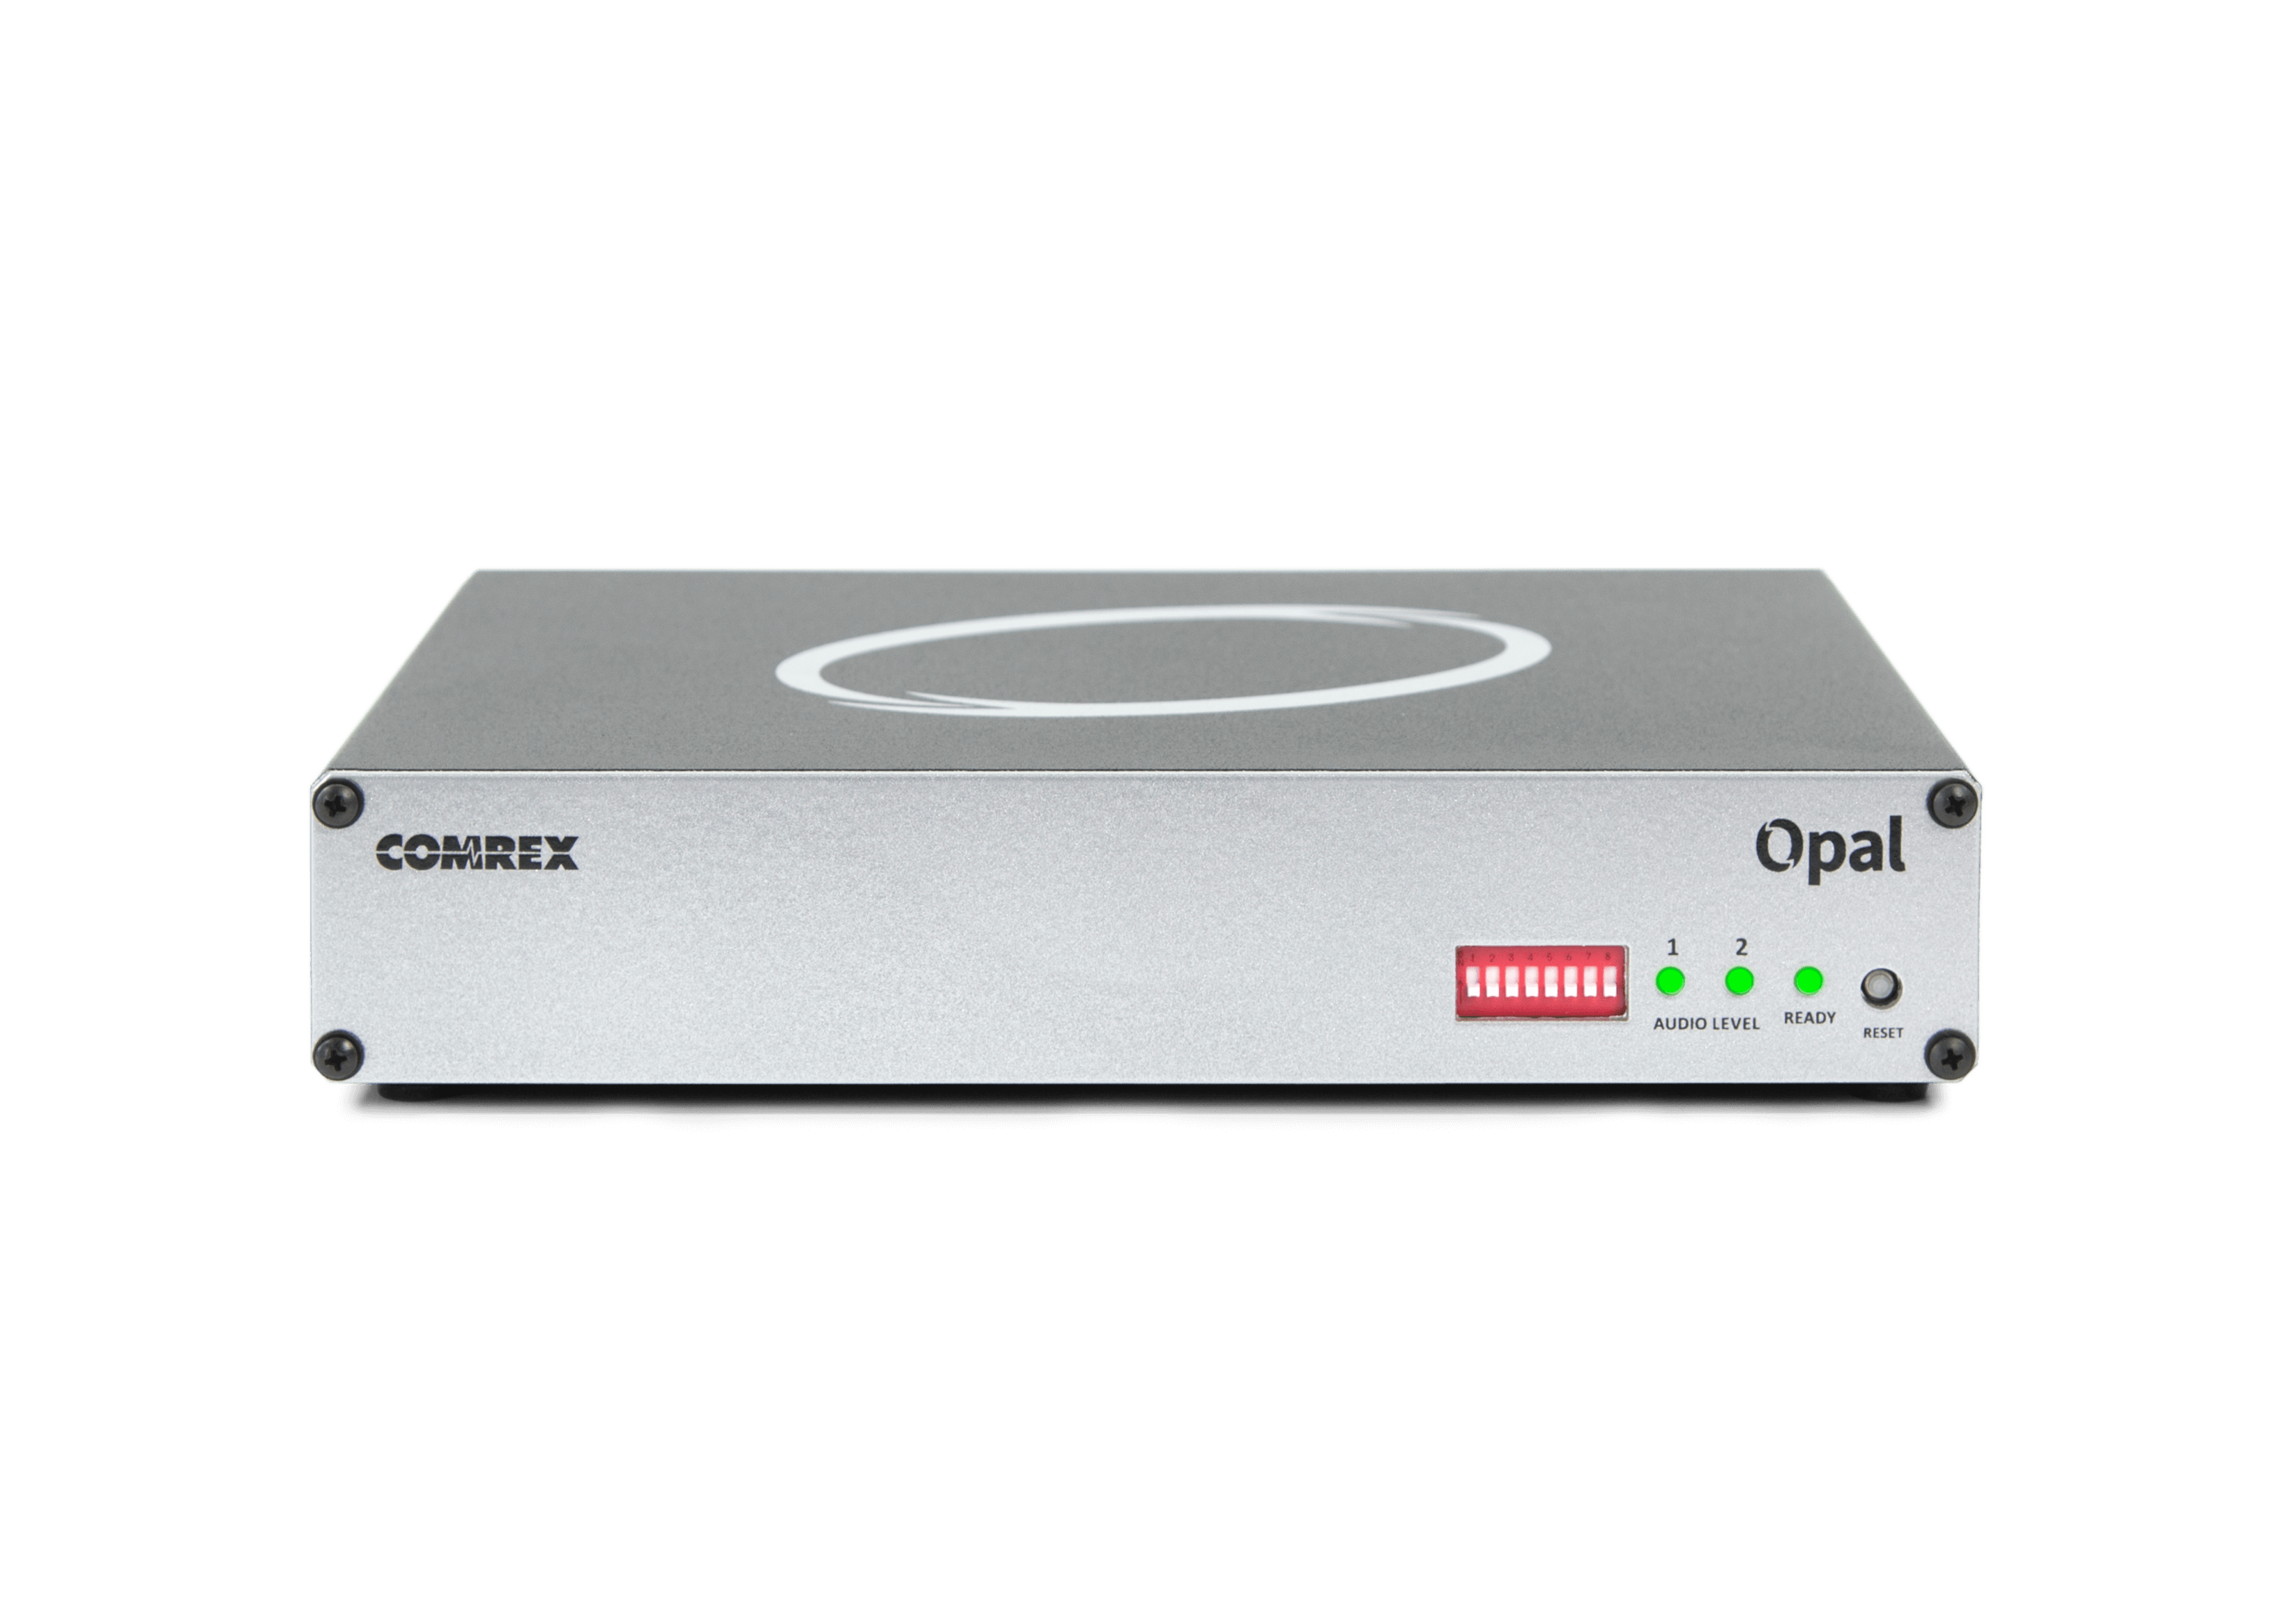 Comrex Opal IP audio gateway